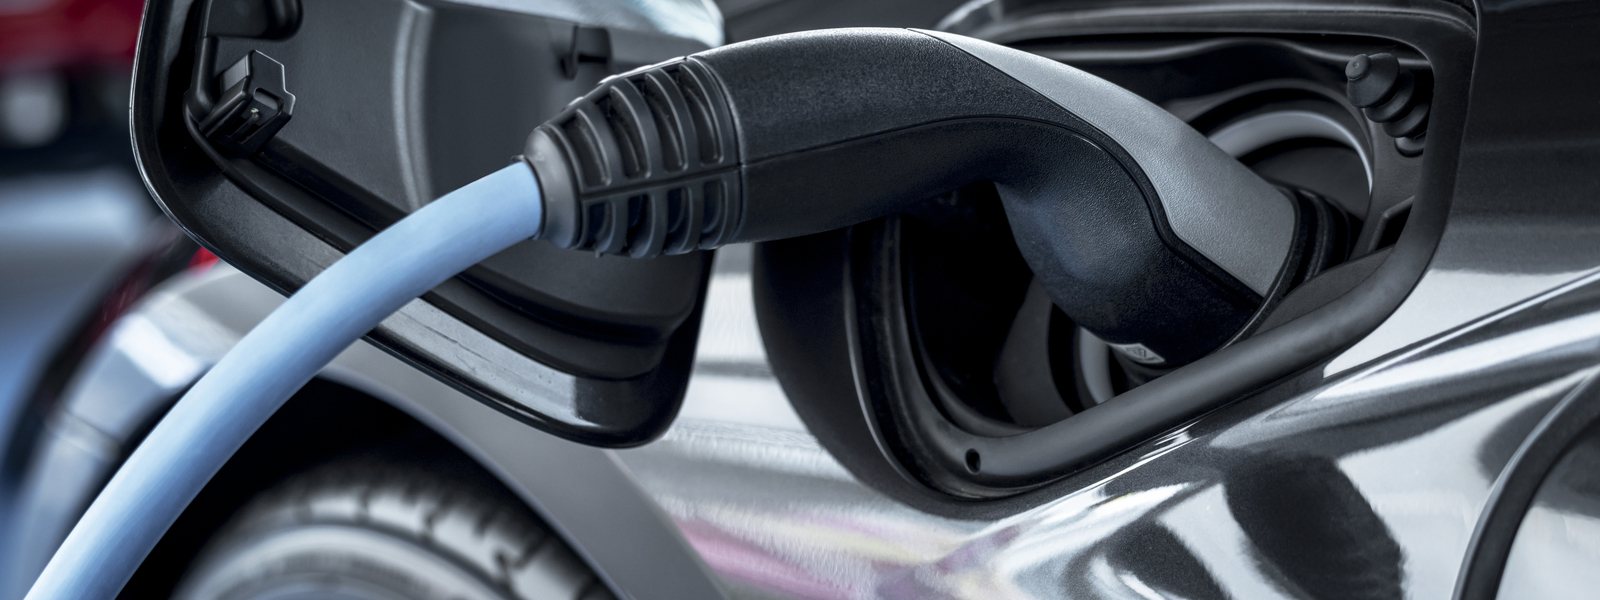 California may offer bigger rebates for electric car owners